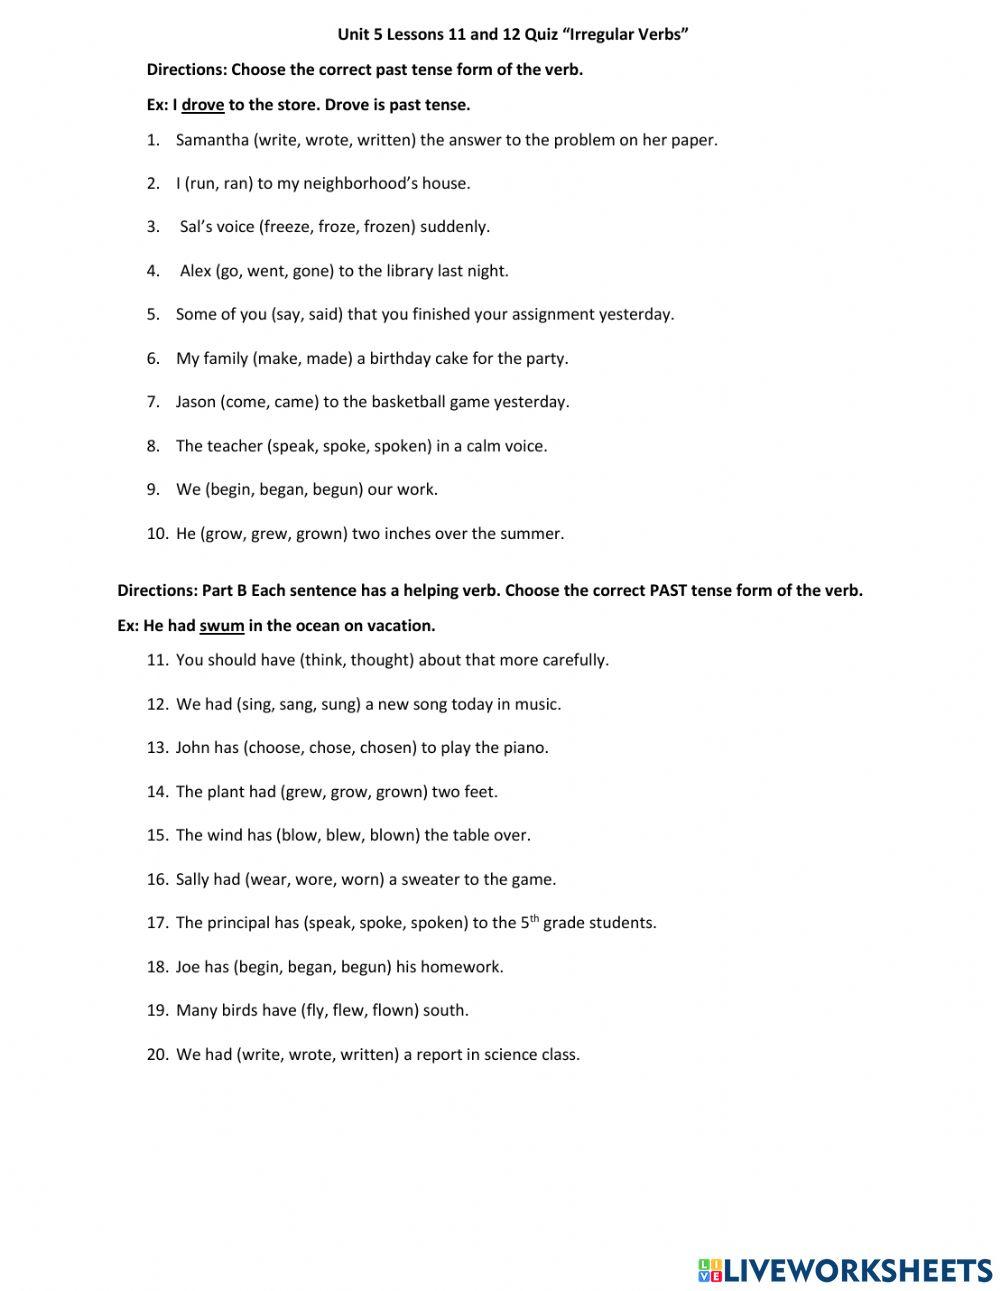 Unit 5 Lessons 11 and 12 Quiz